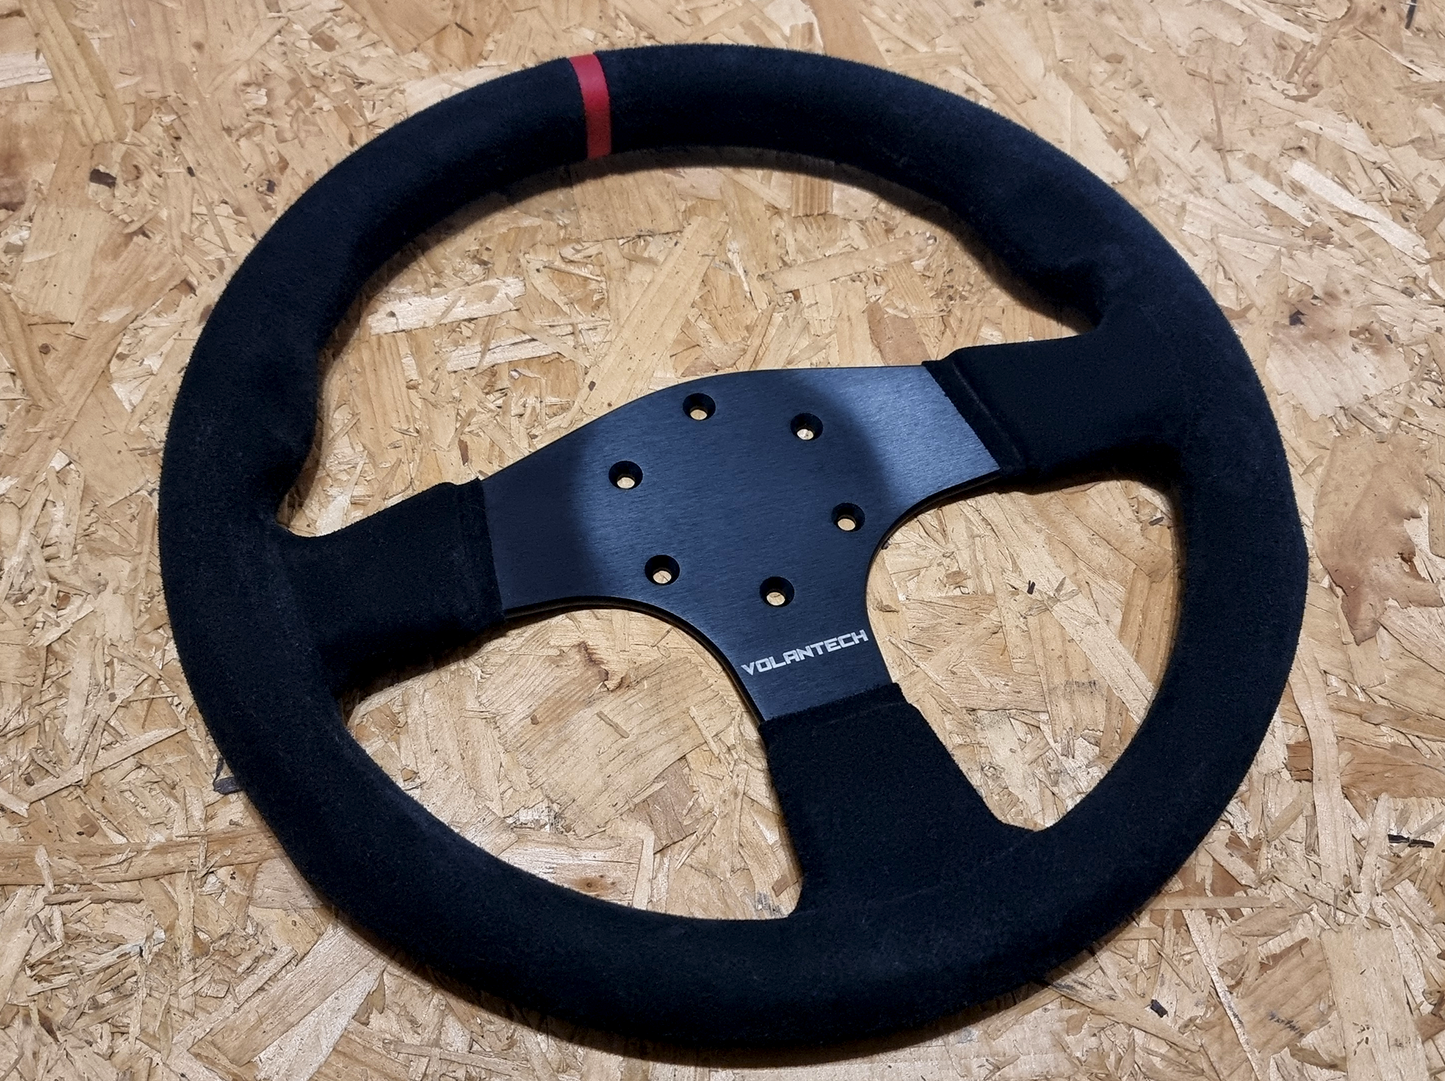 Volantech Uno Red 330mm Suede Racing Steering Wheel